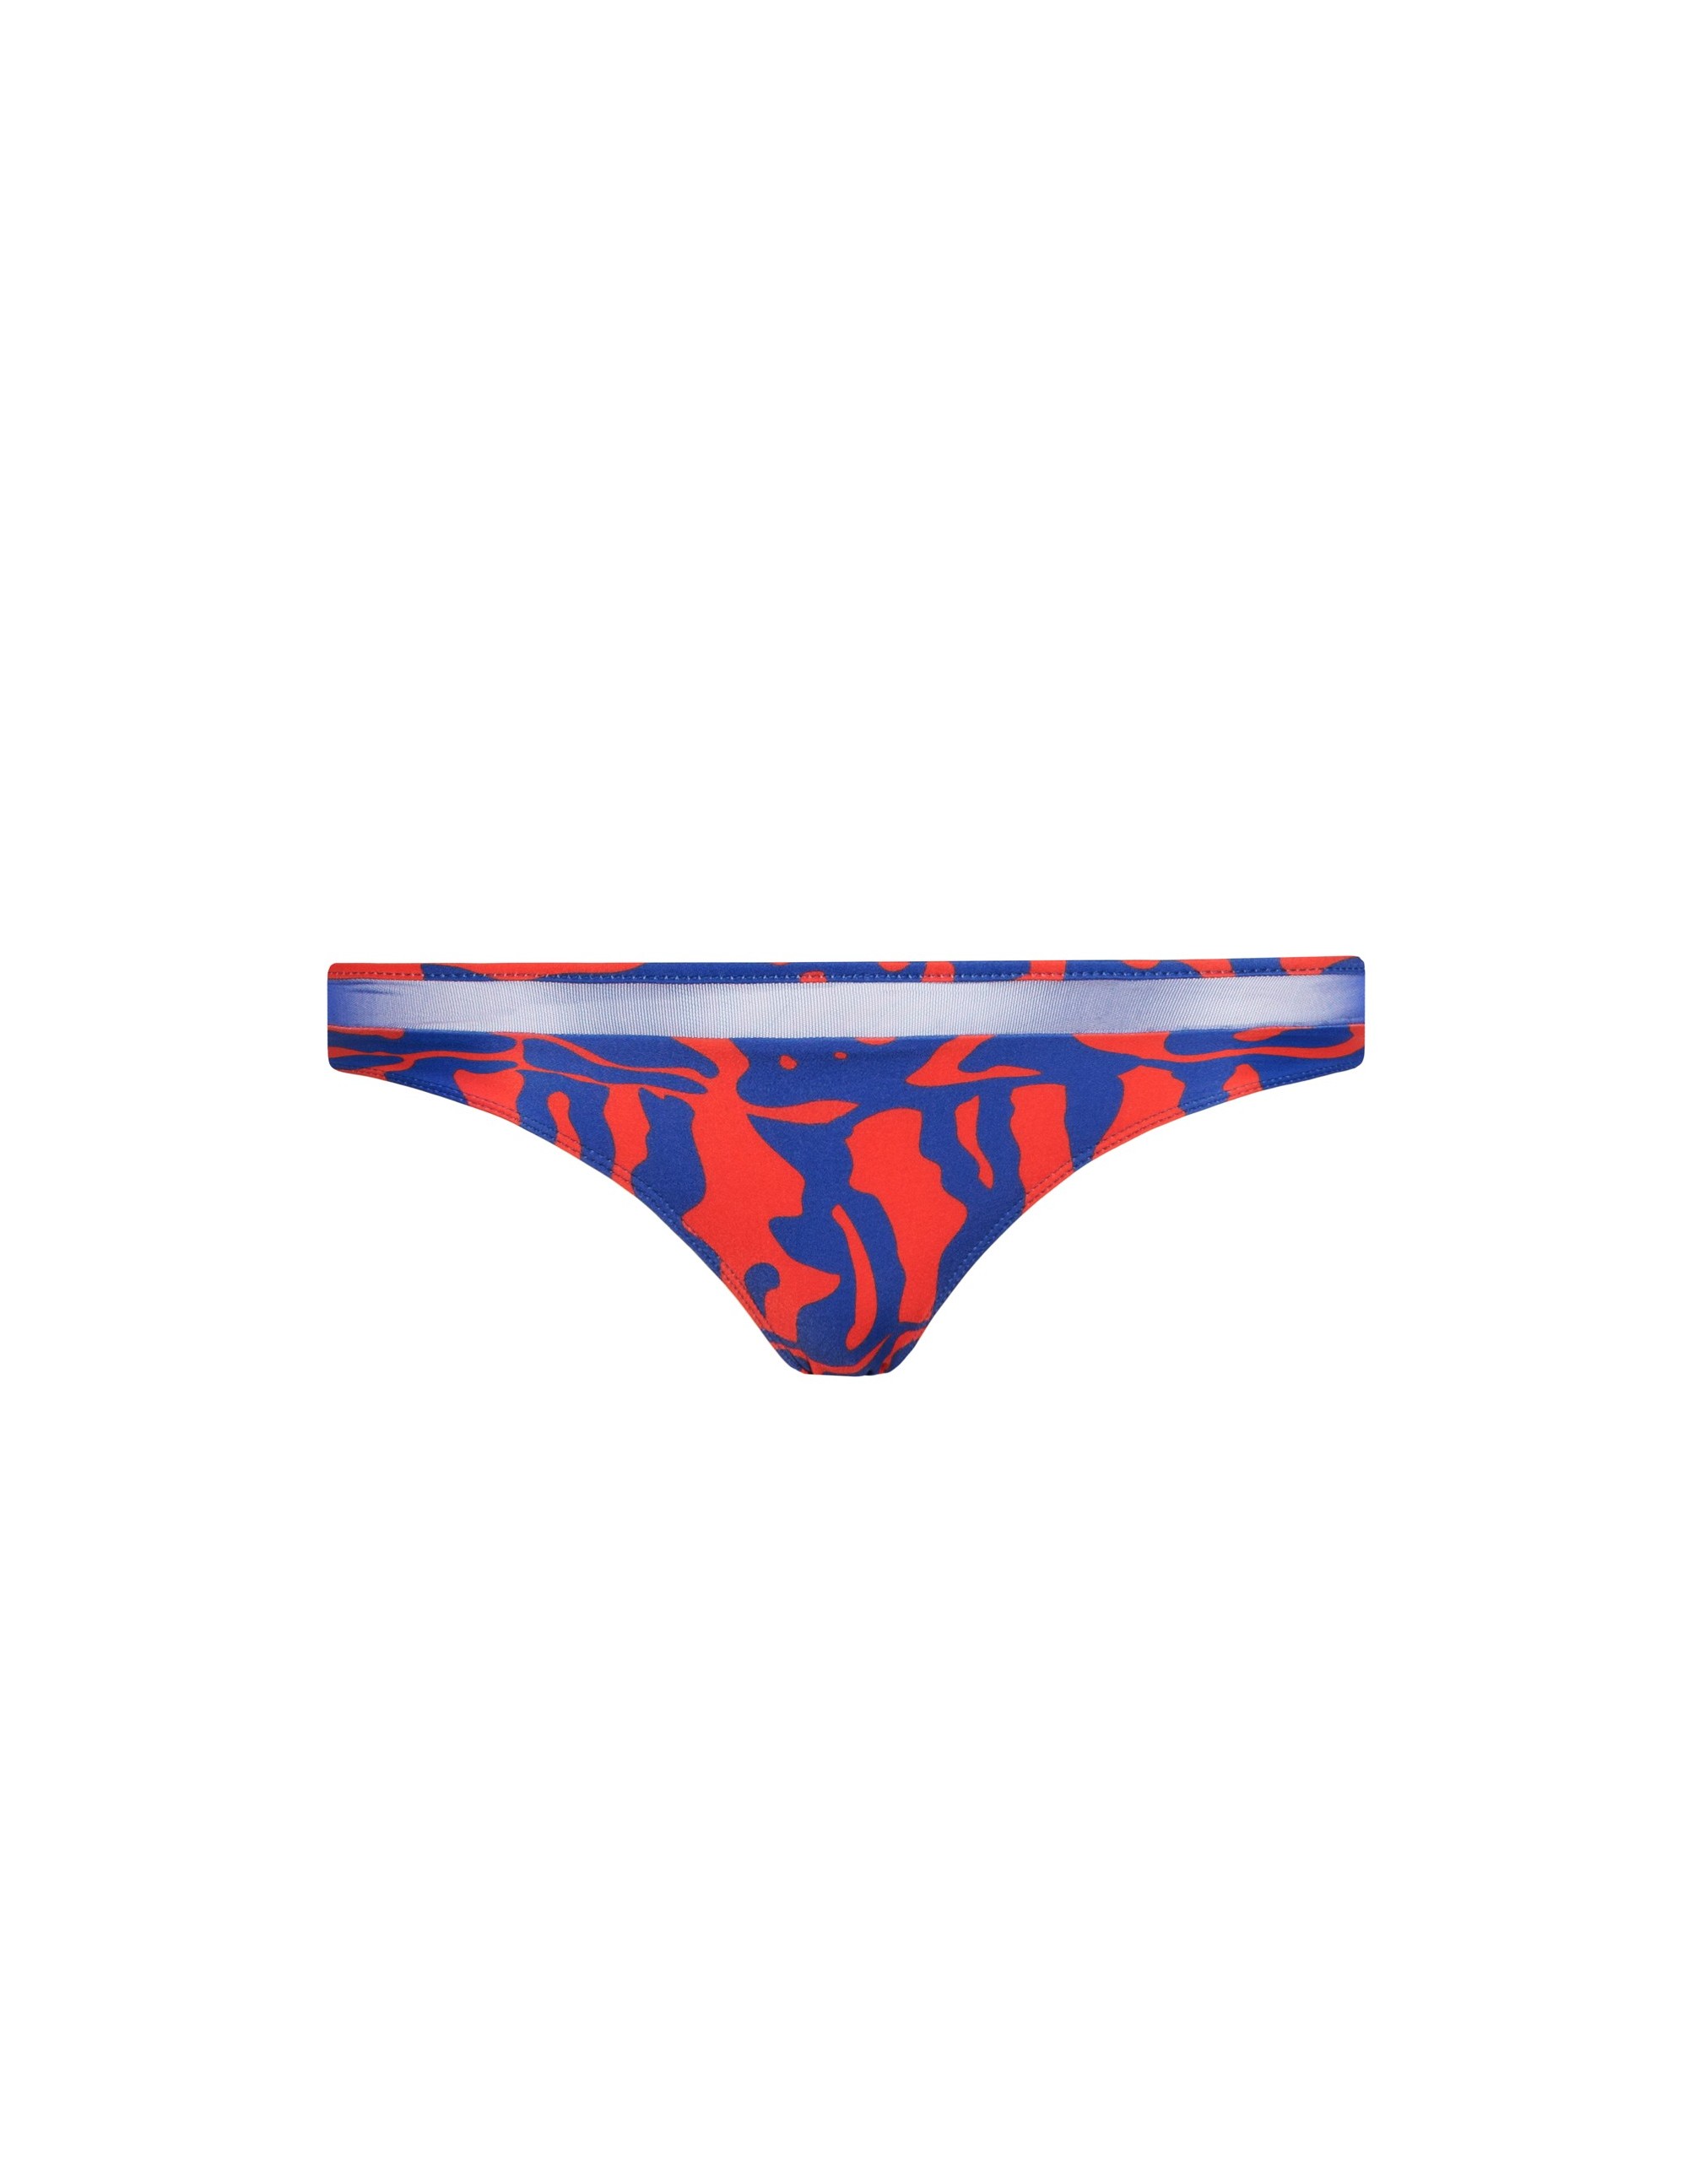 JAZ bikini bottom - MIMETRIC